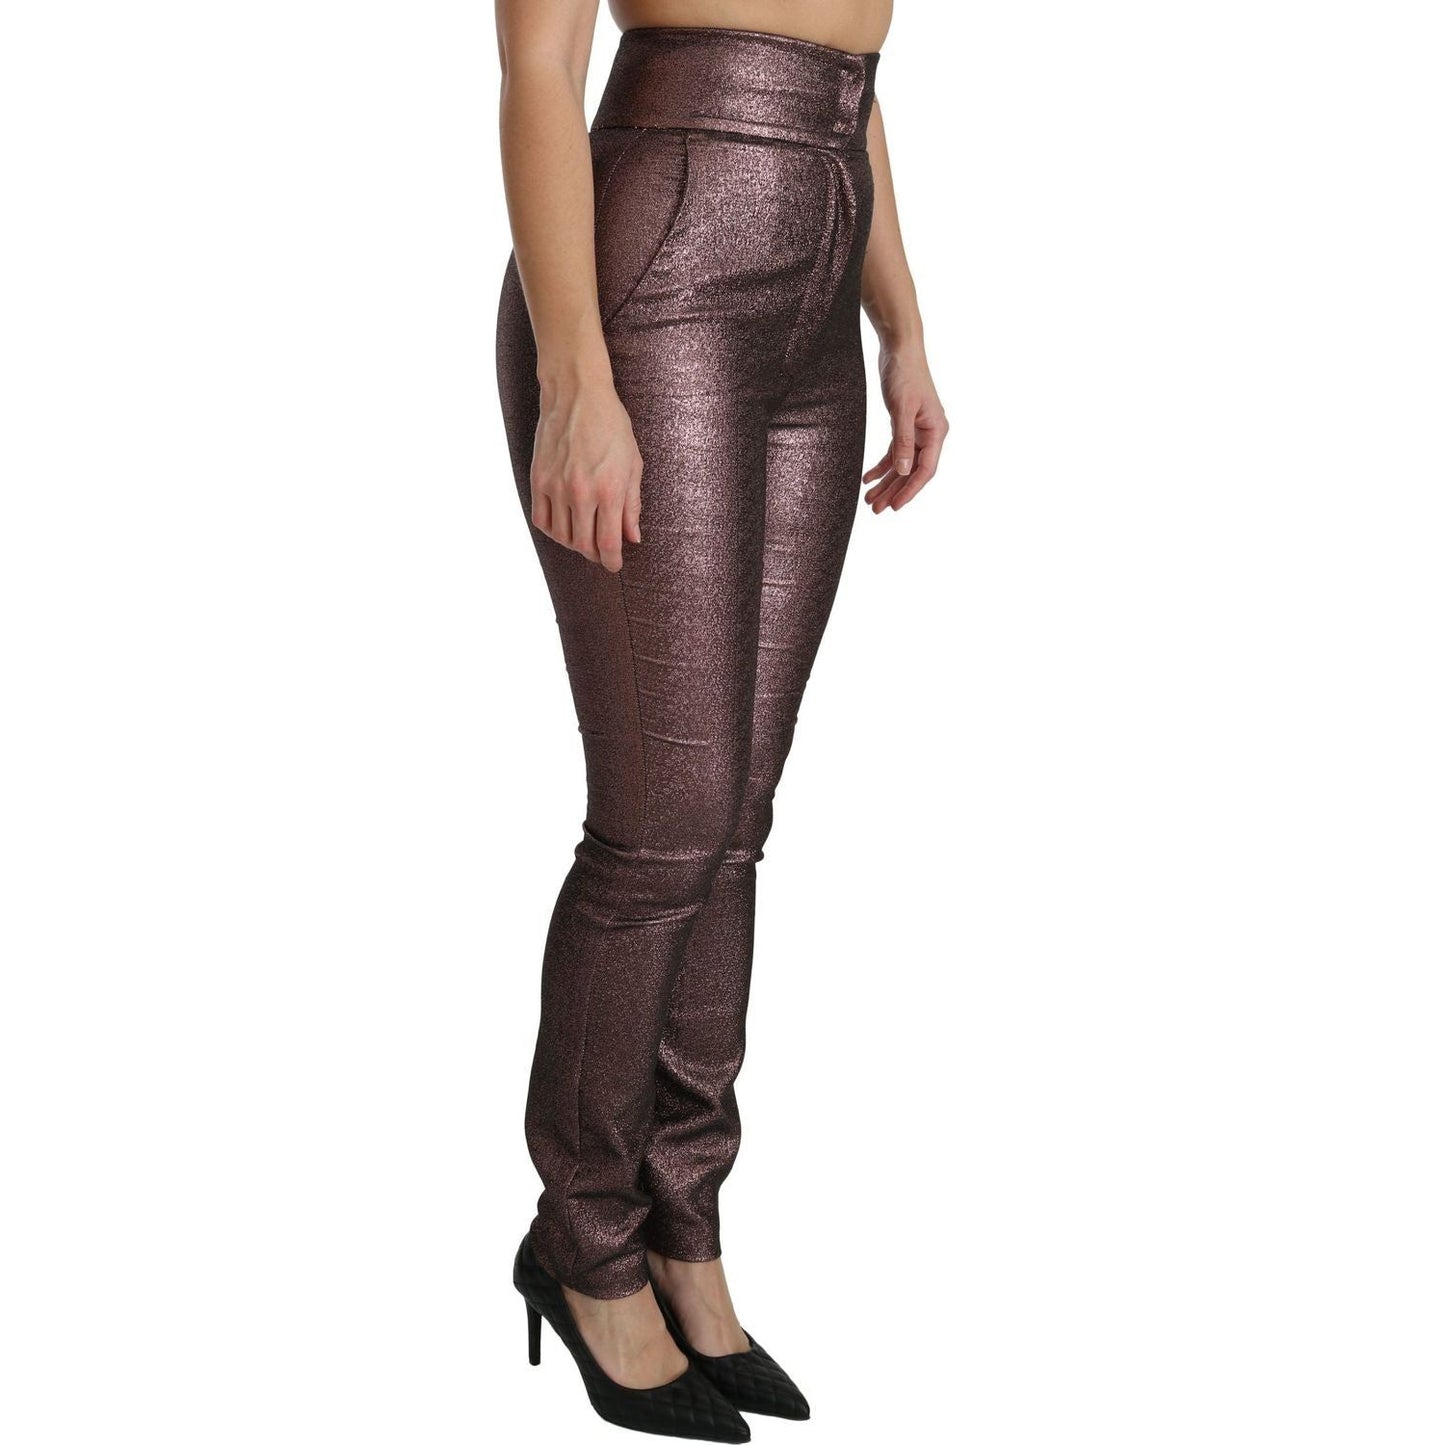 Dolce & Gabbana High Waist Slim Fit Metallic Pants purple-metallic-high-waist-skinny-cotton-pants